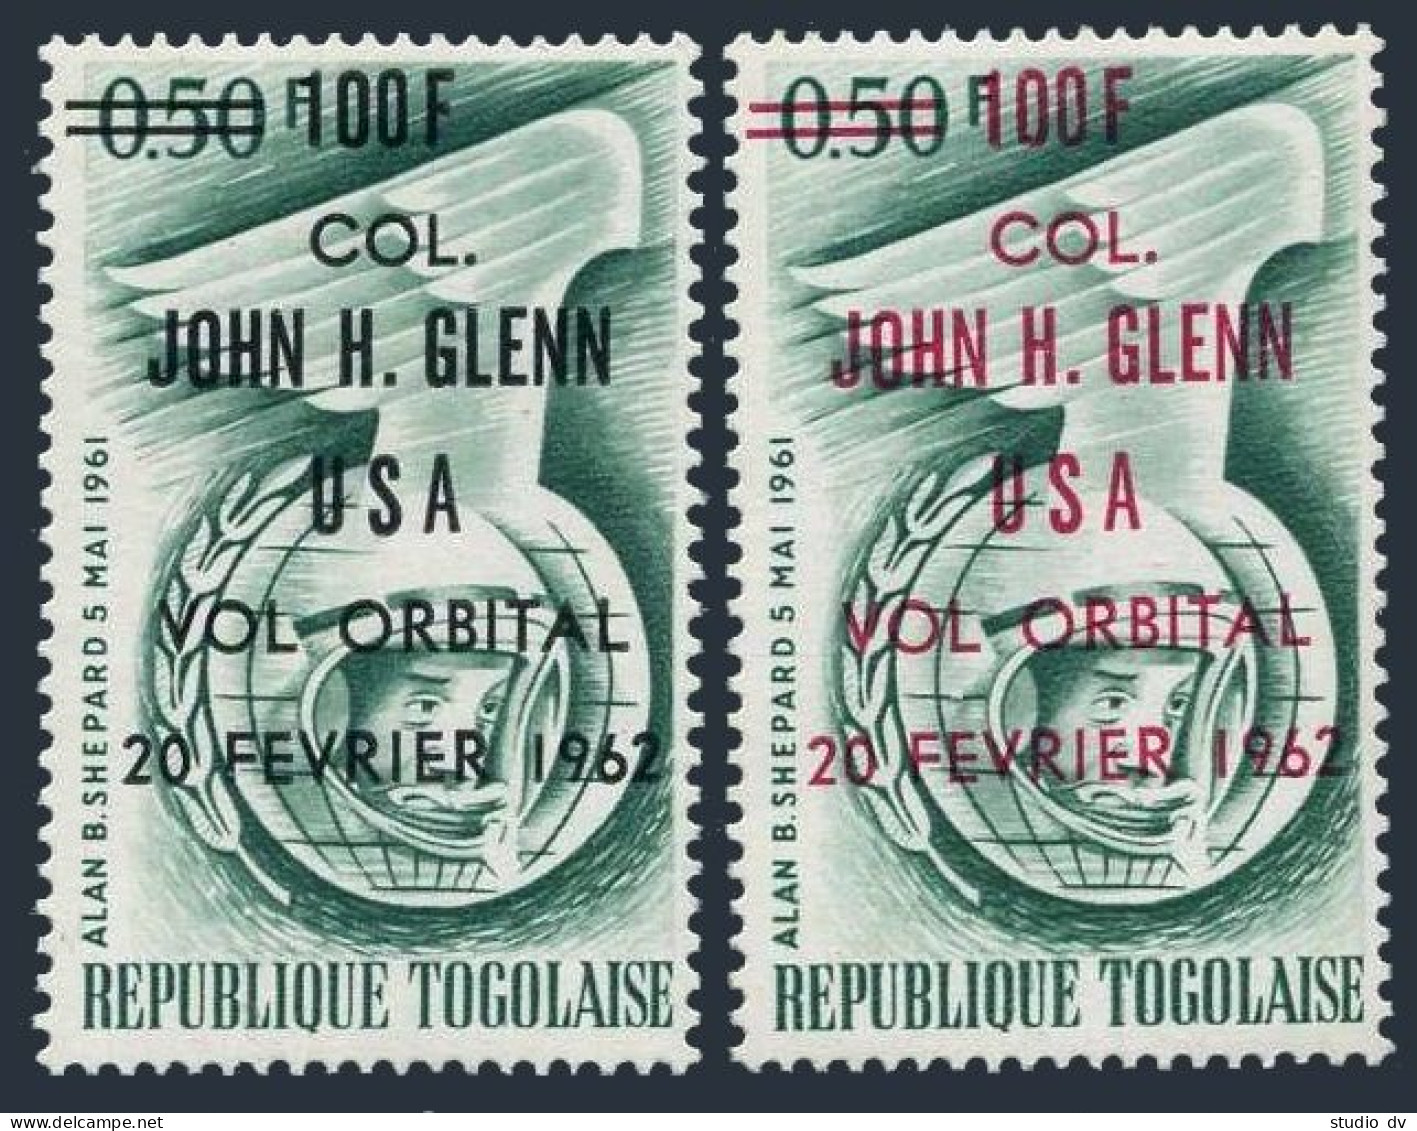 Togo 421-421a,MNH.Michel 339a-339b. 100F COL JOHN H.GLENN USA,1962. - Togo (1960-...)